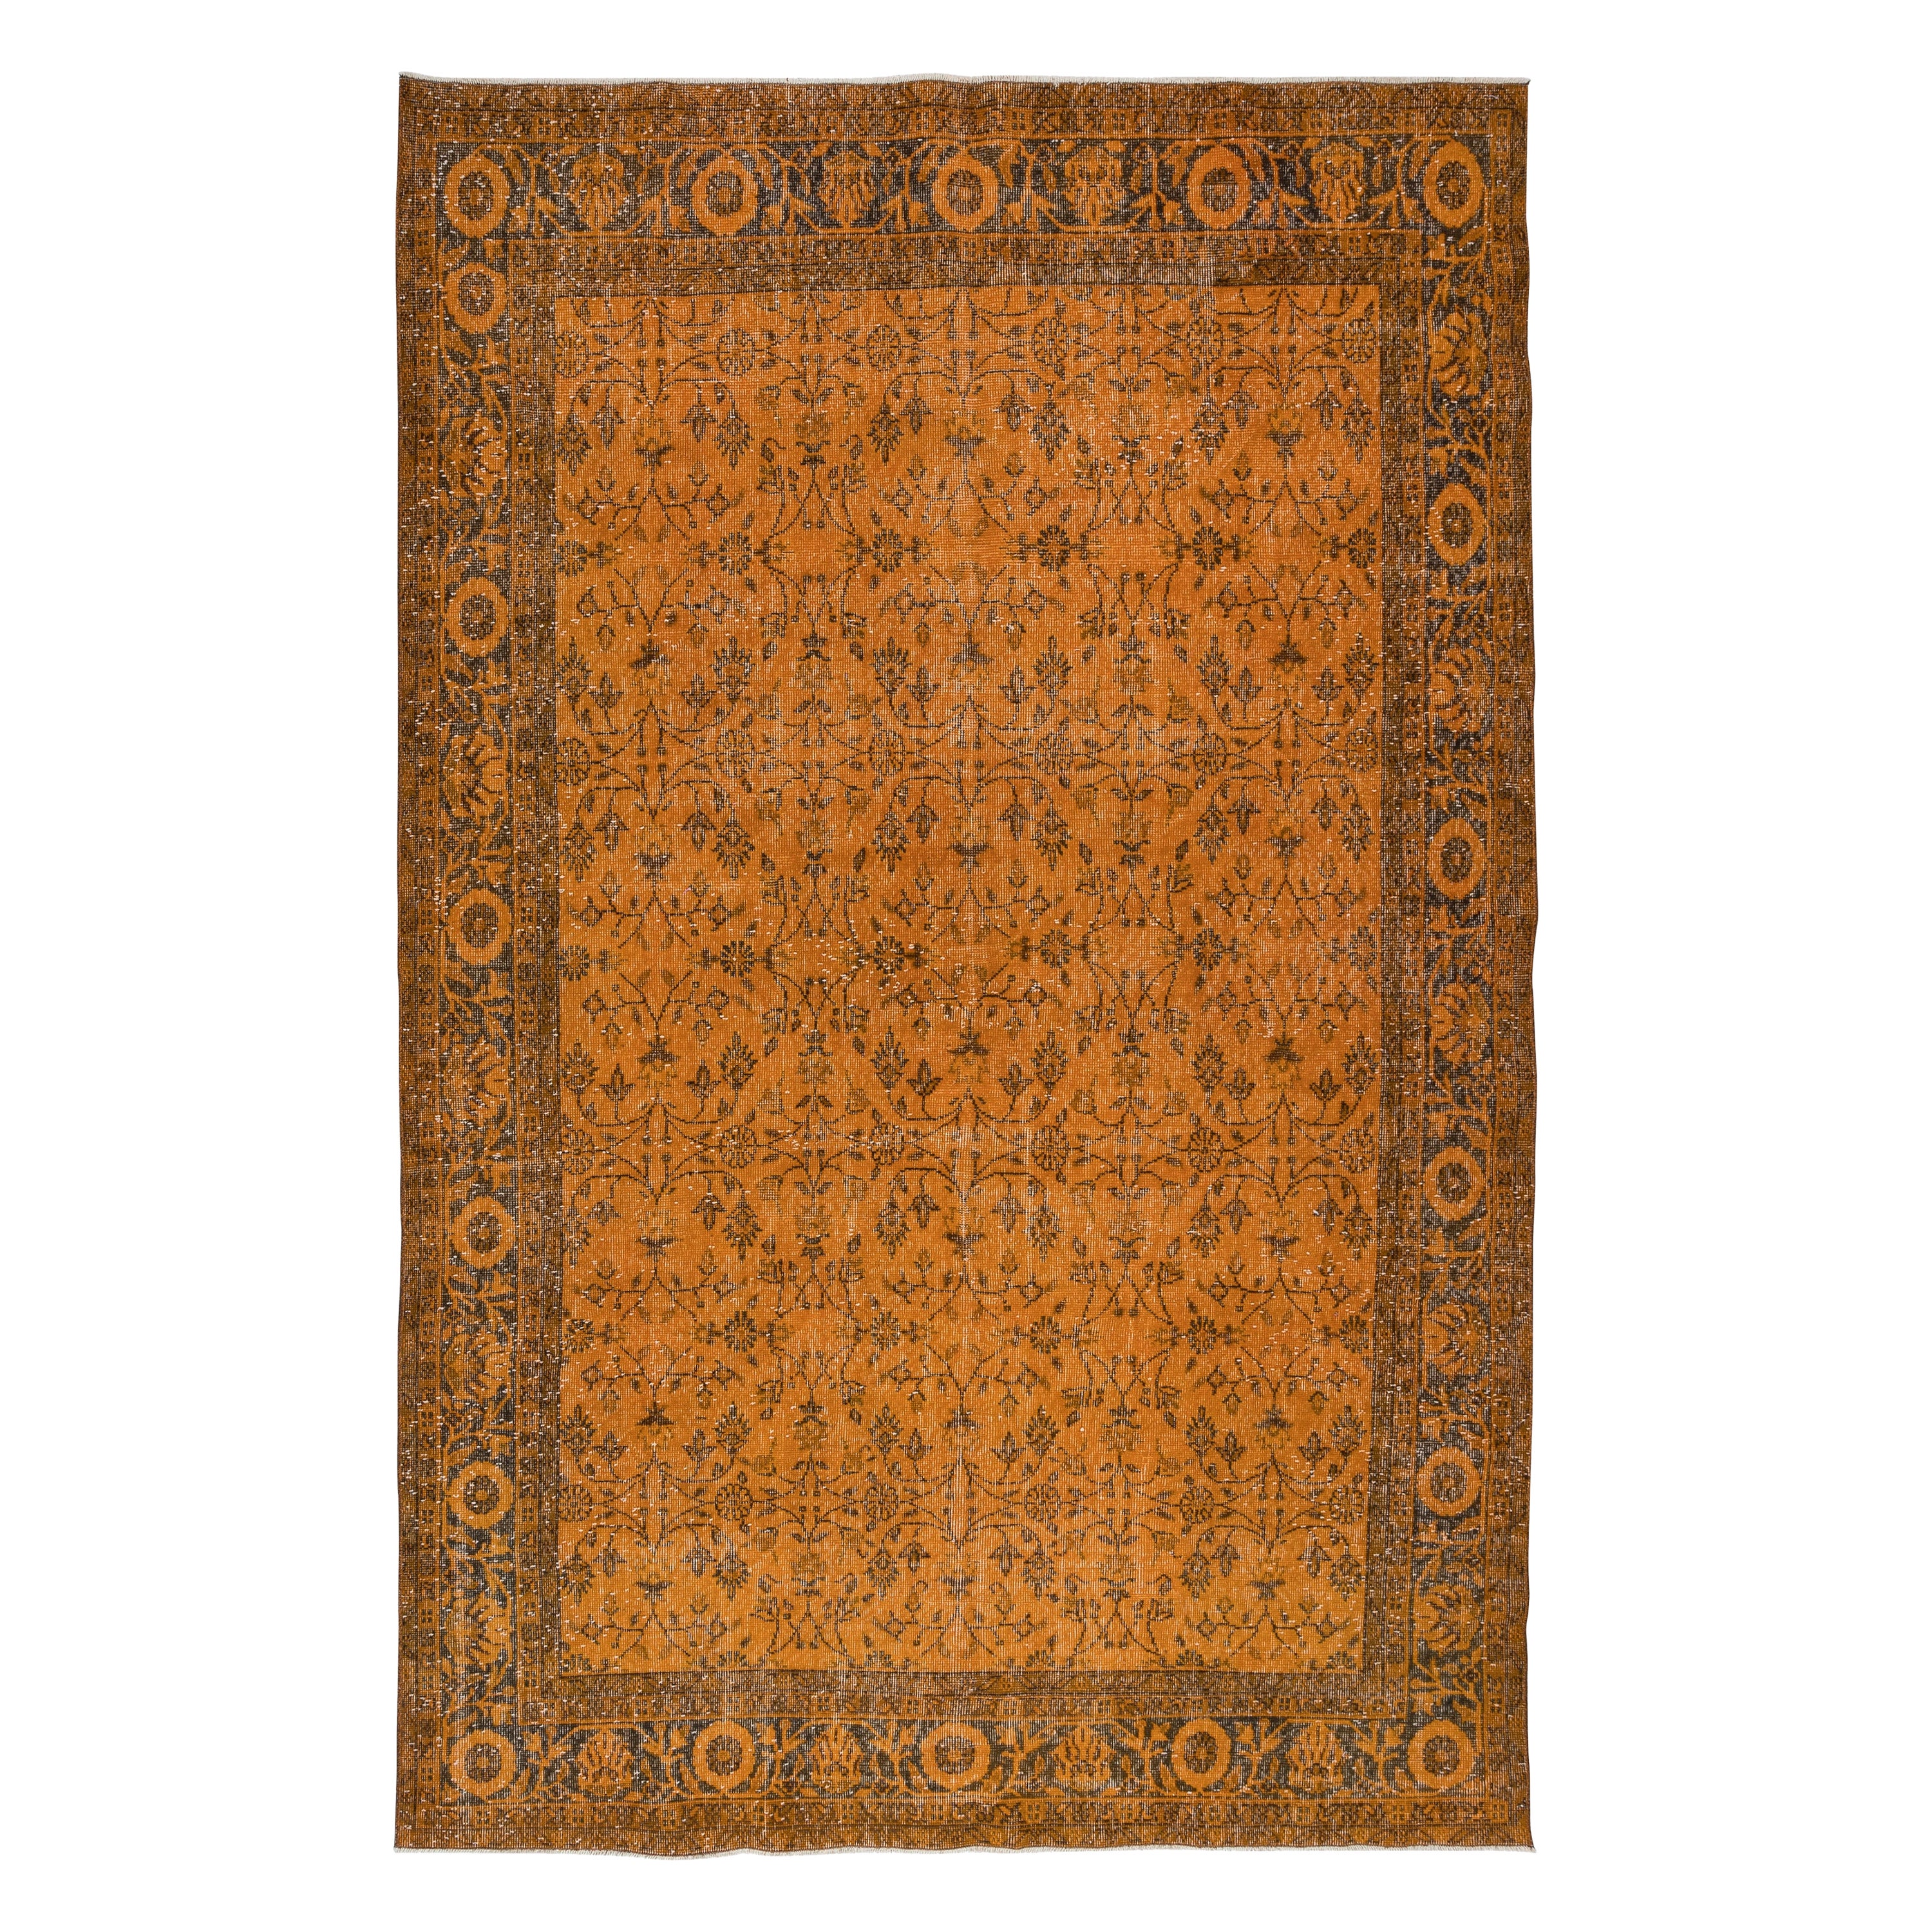 6.7x10.5 Ft Handmade Rug with All-Over Botanical Design, Orange Turkish Carpet